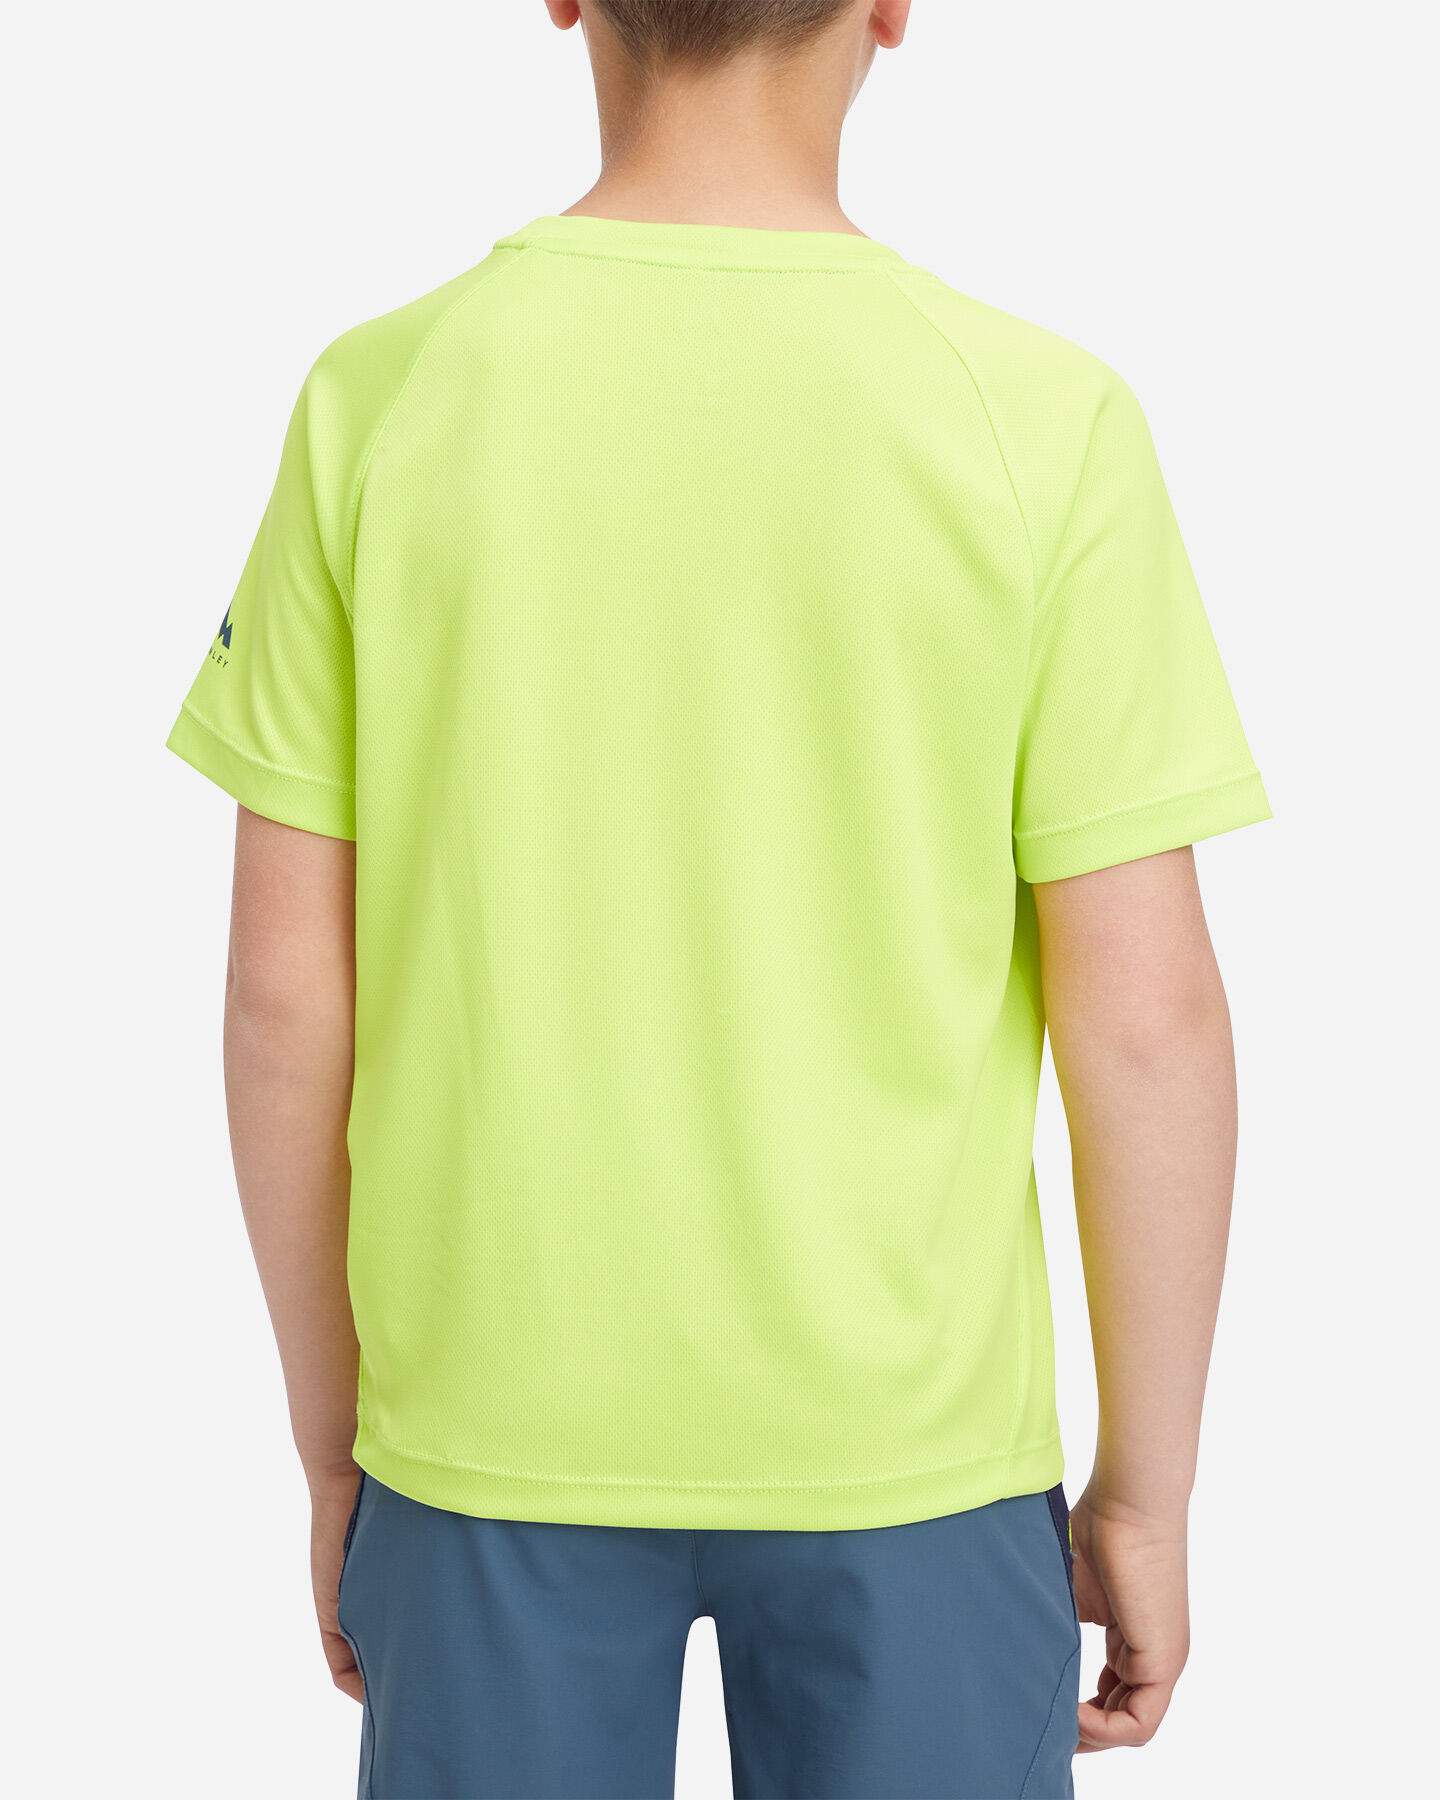  T-Shirt MCKINLEY ASTER JR S5637801|694|128 scatto 2